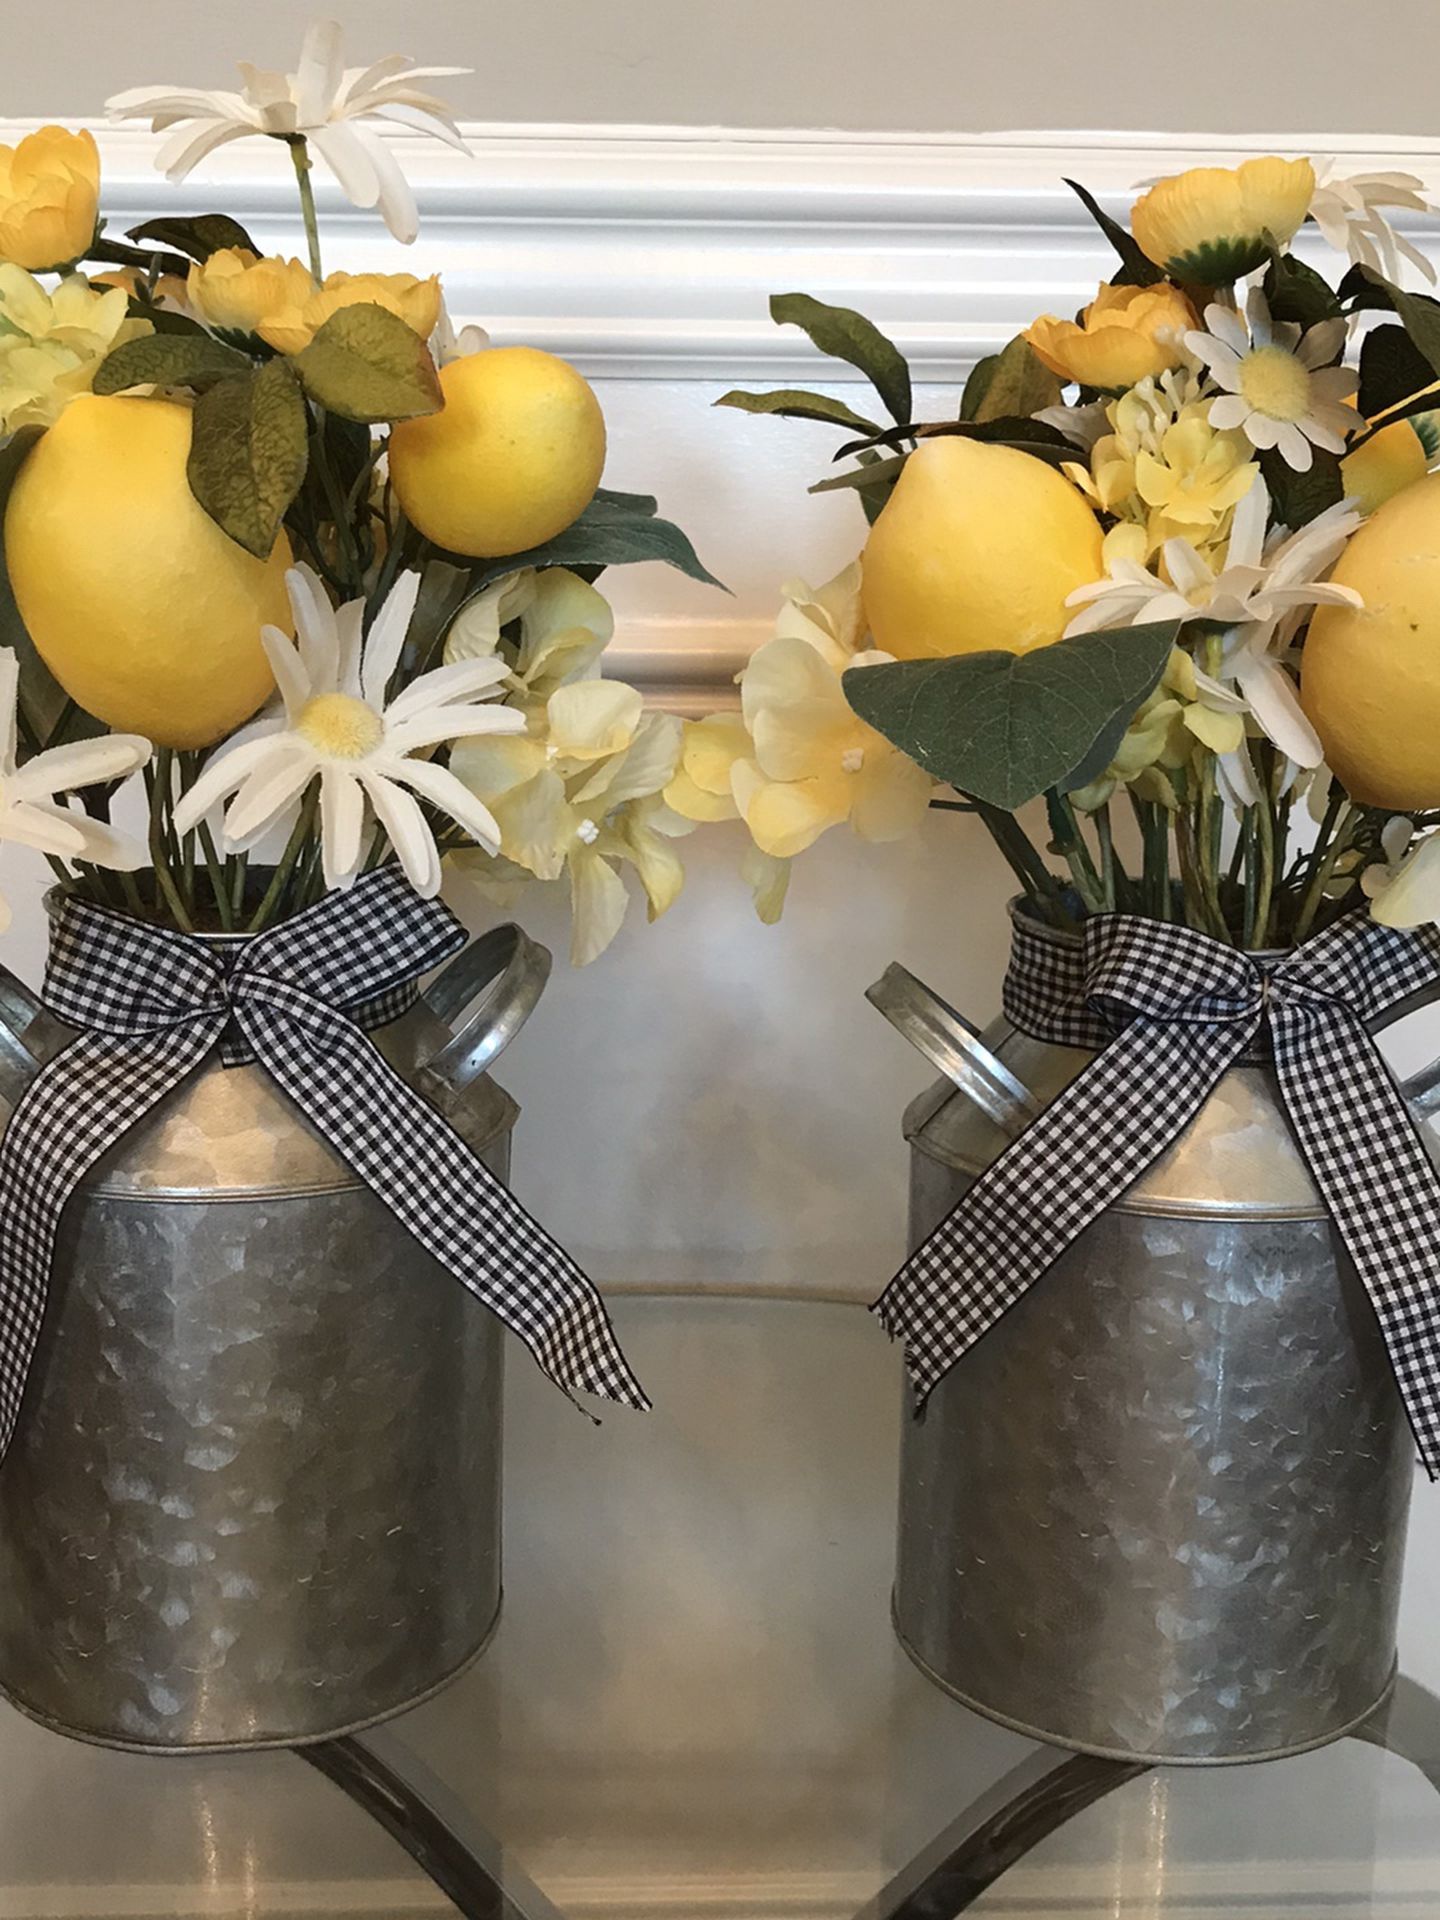 SET OF 2 - Lemon/Flower Arrangements in Galvanized Tins 14”T